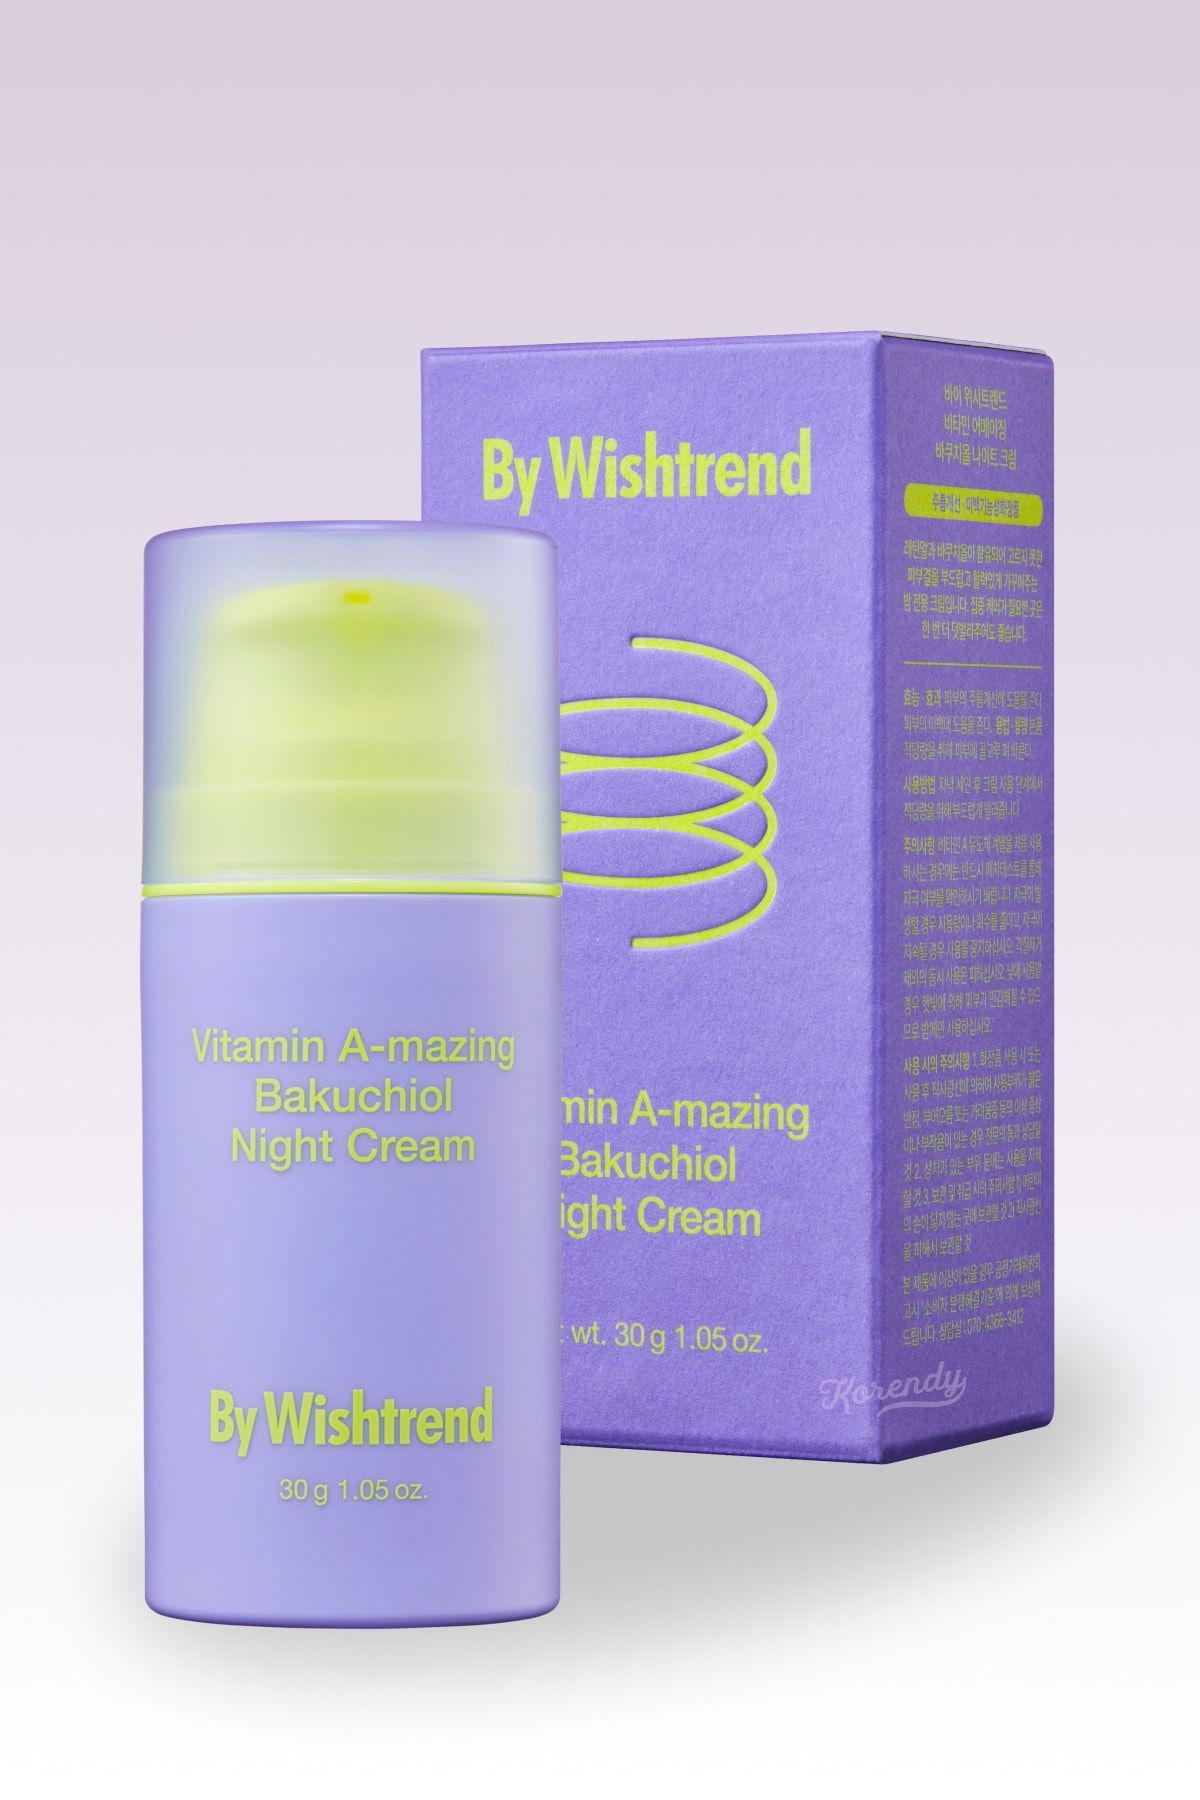 By Wishtrend Vitamin A-mazing Bakuchiol Night Cream - %0.03 Retinal (retinol Değildir) Gece Kremi 30gr